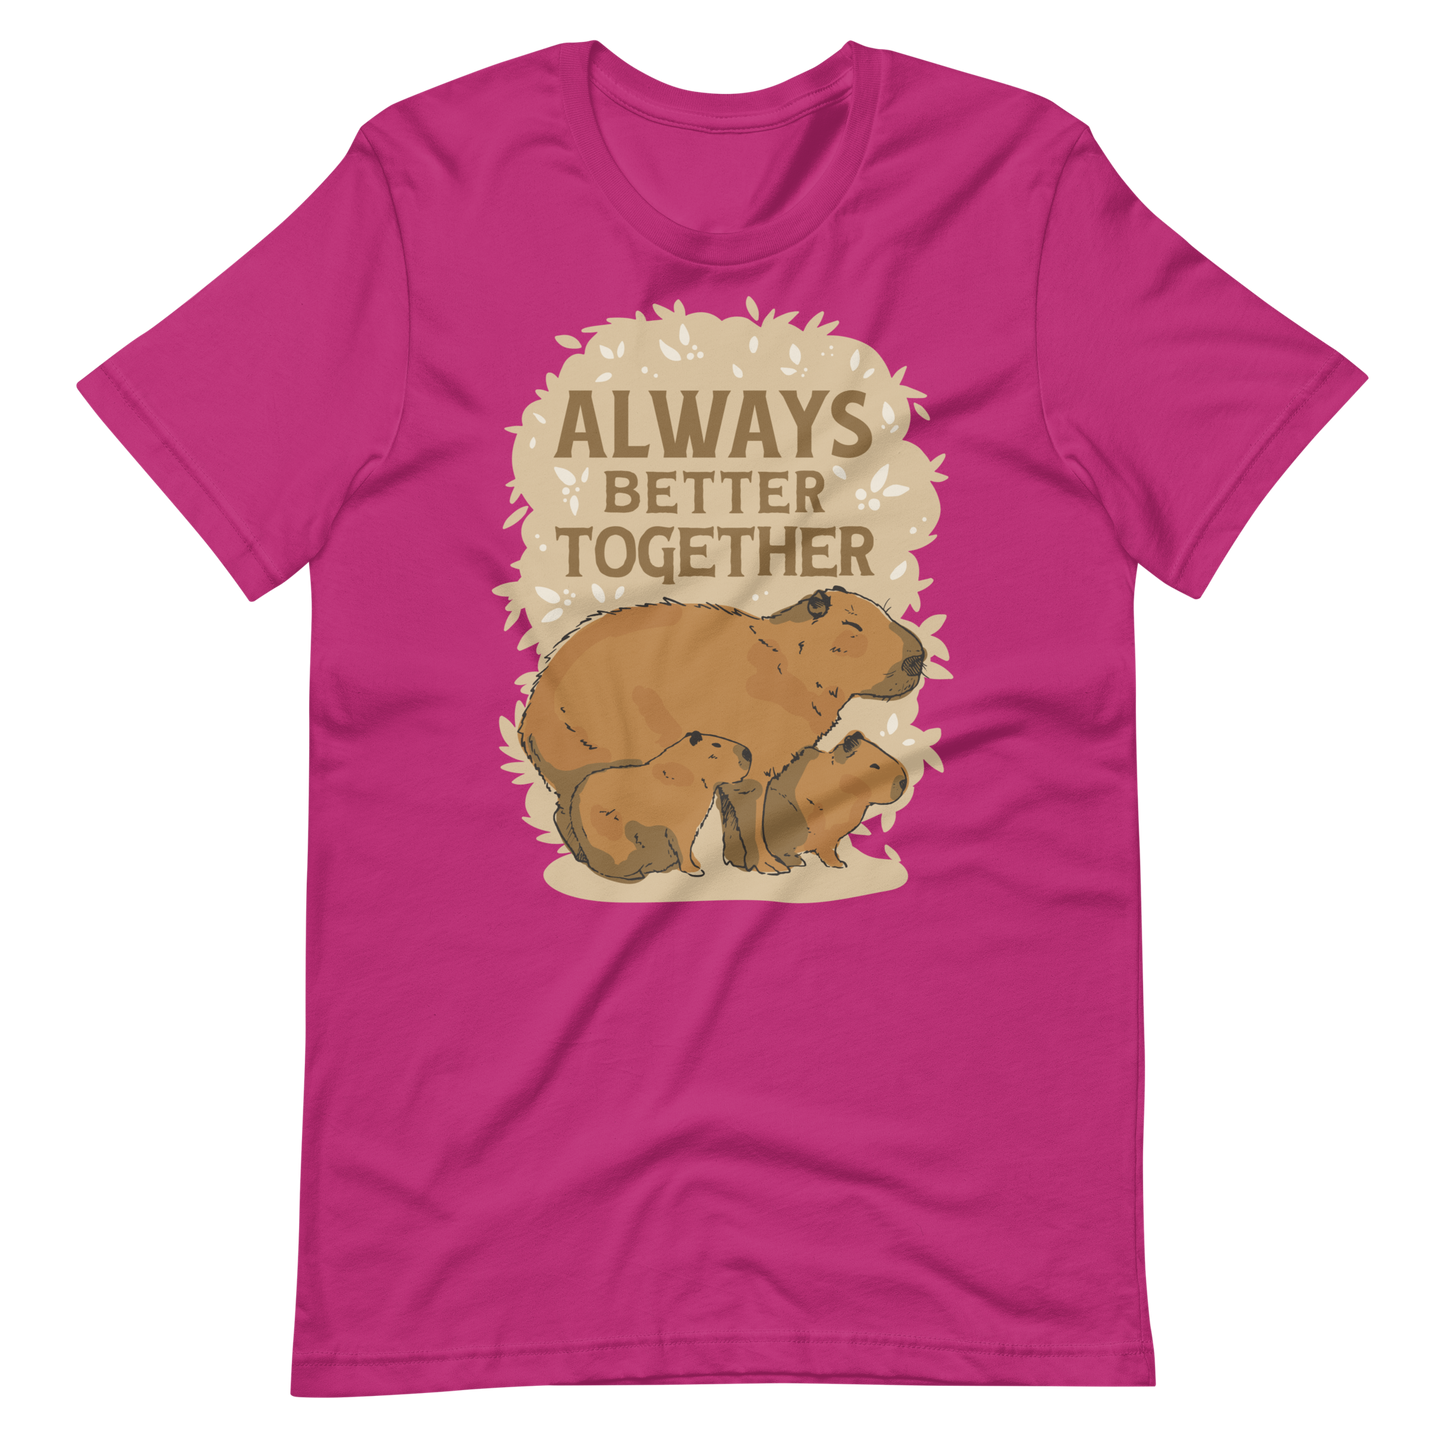 Capybara family quote | Unisex t-shirt